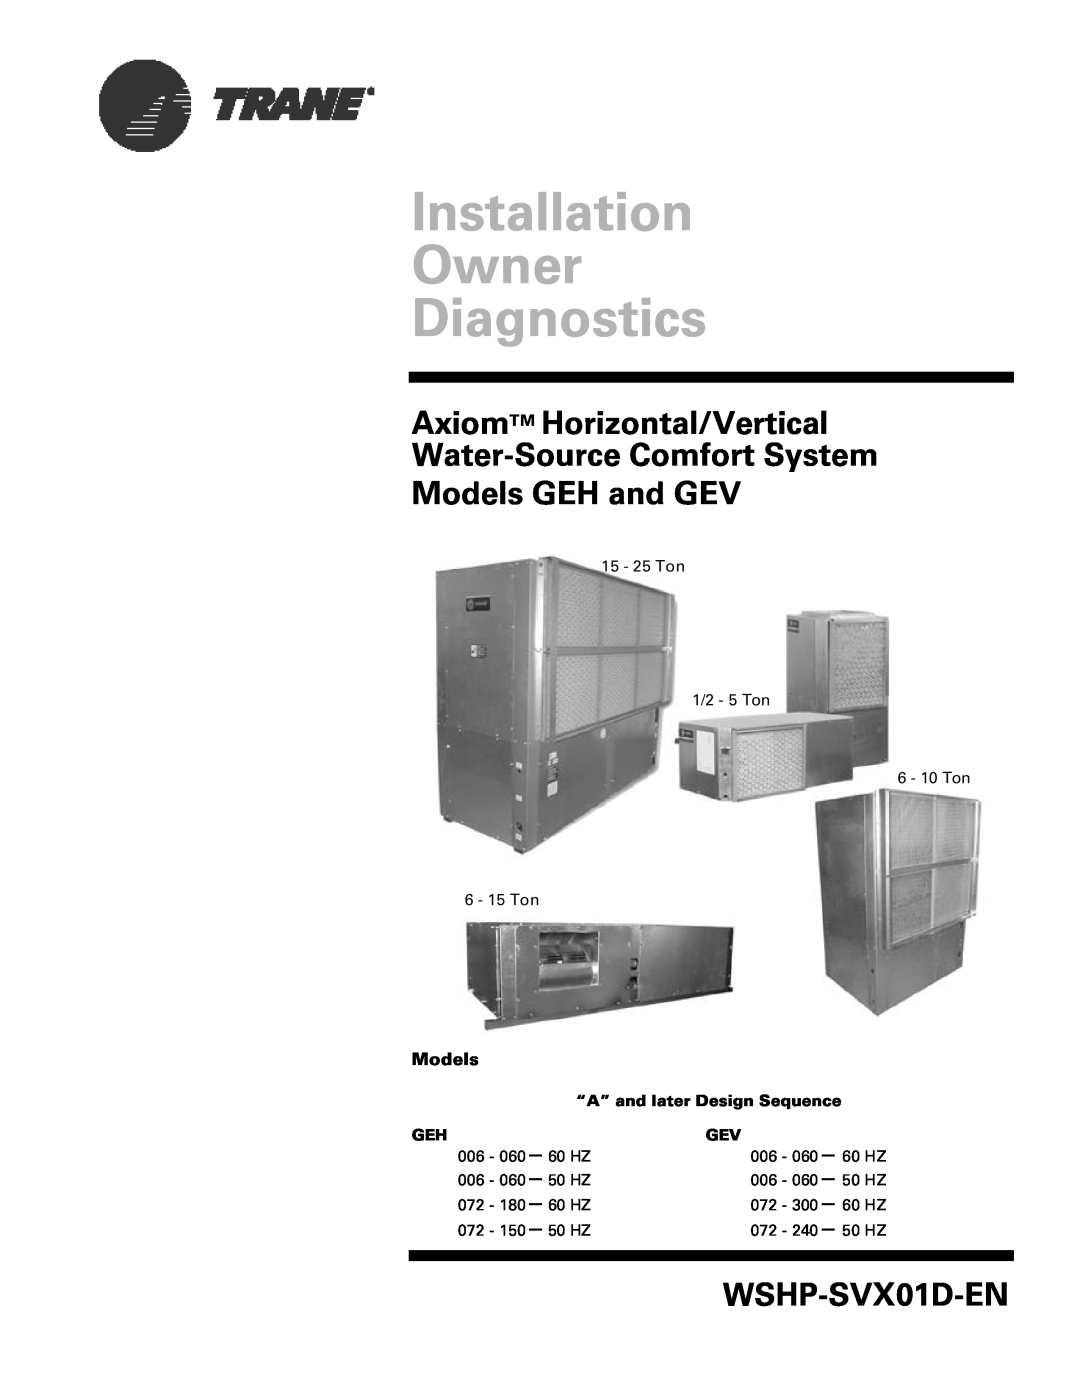 Trane GEV, GEH manual Installation Owner Diagnostics, AxiomTM Horizontal/Vertical, WSHP-SVX01D-EN, Models 